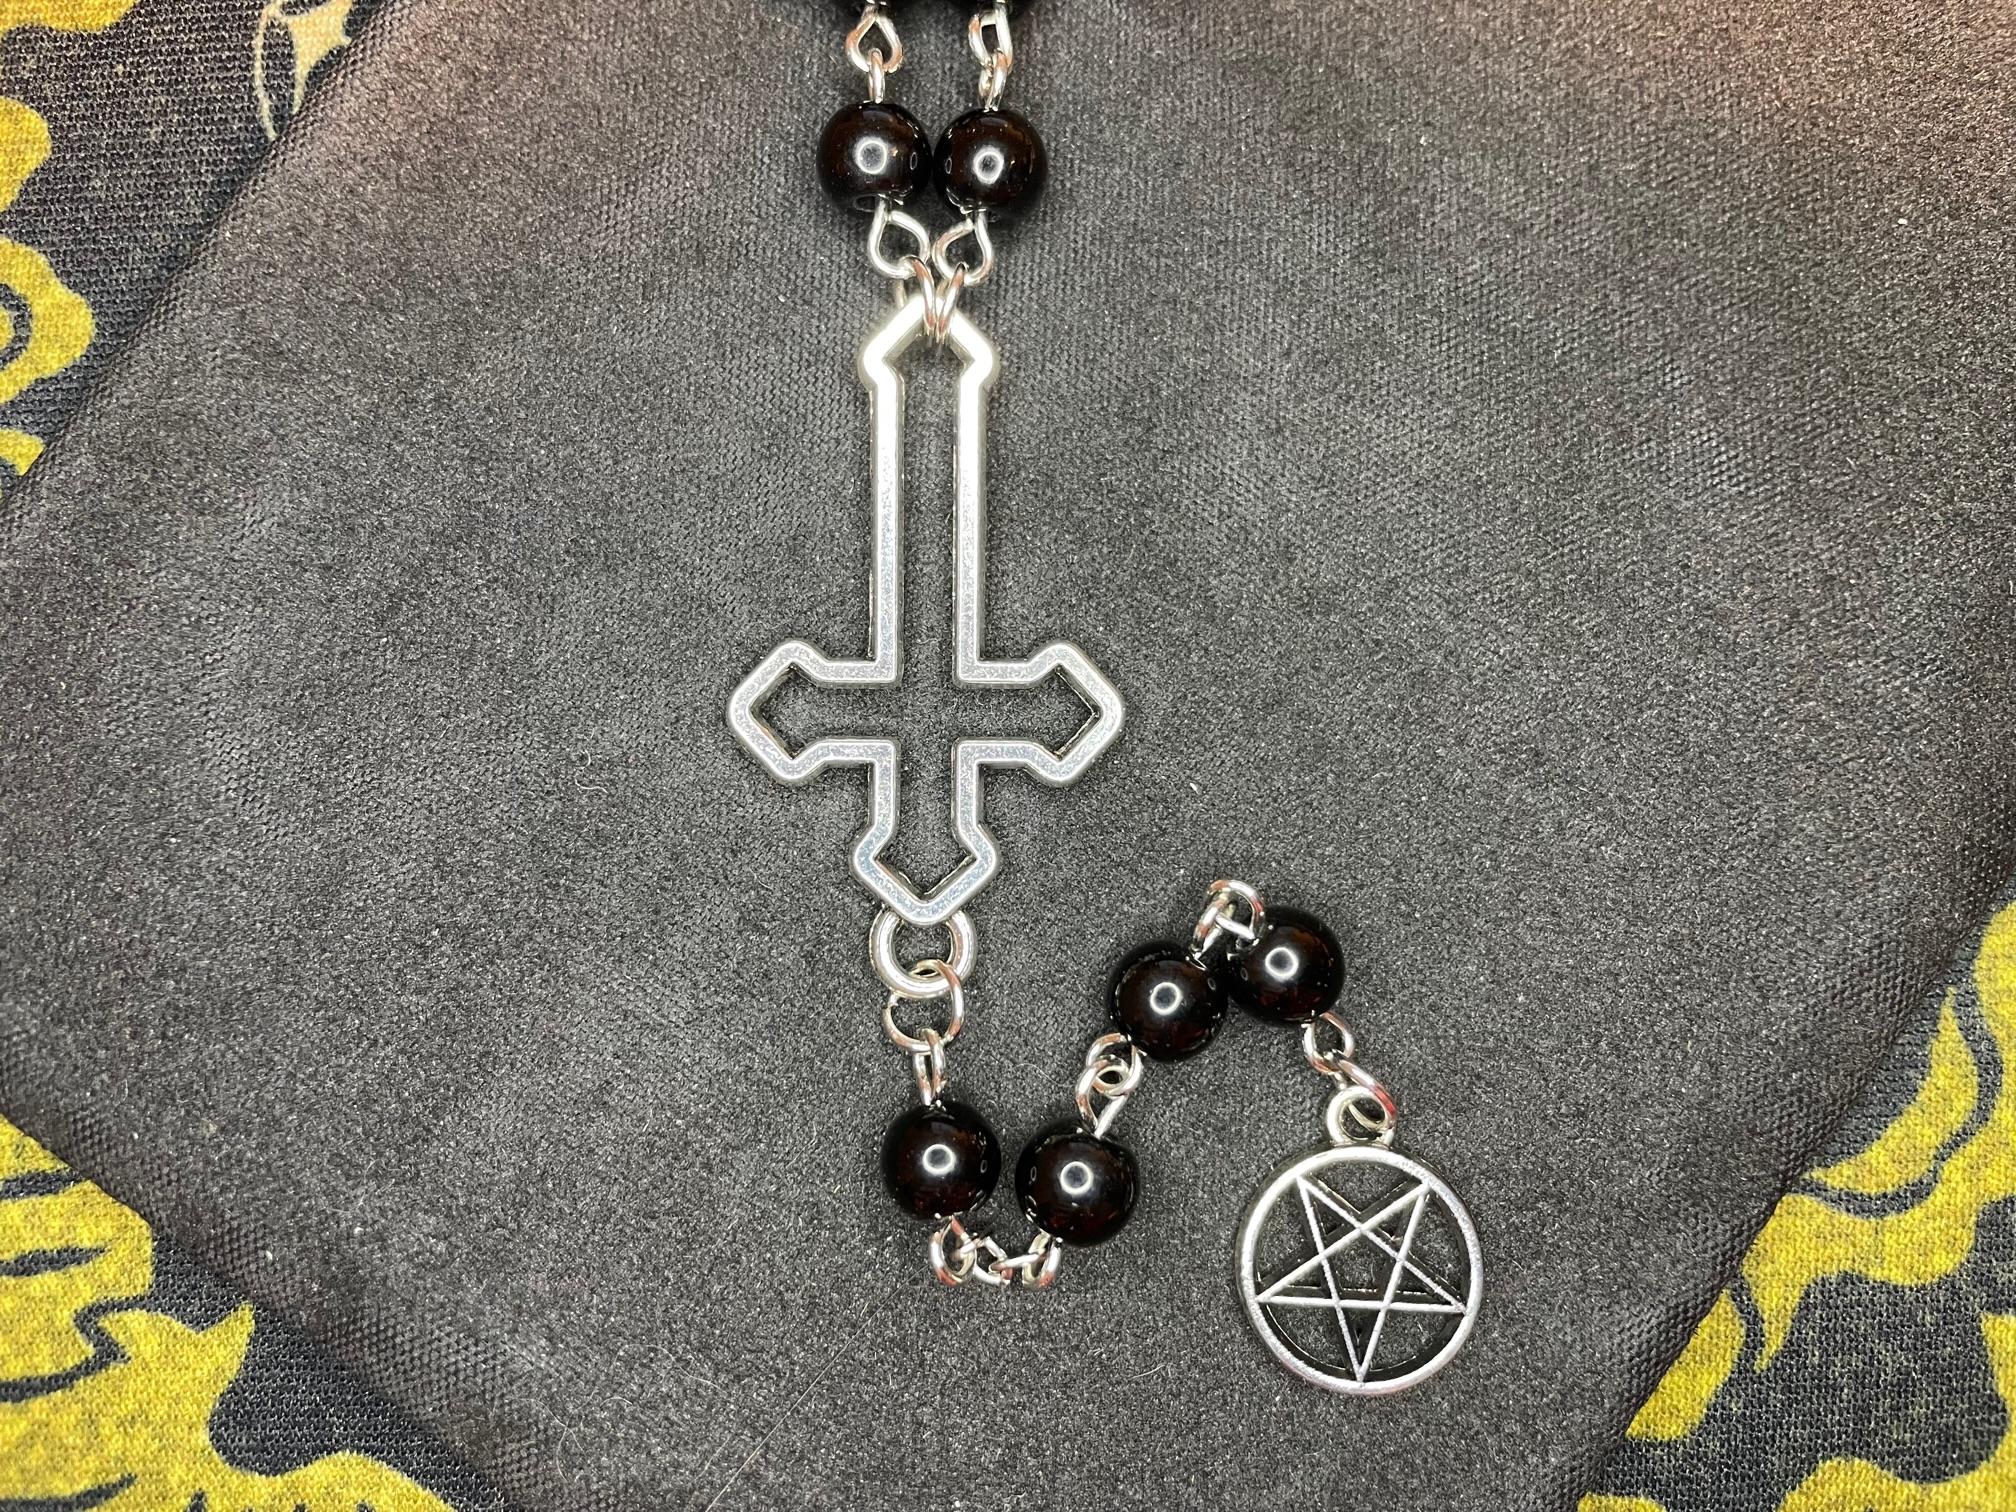 small bead satanic rosary upside down inverted cross pentagram pendant black magic necklace